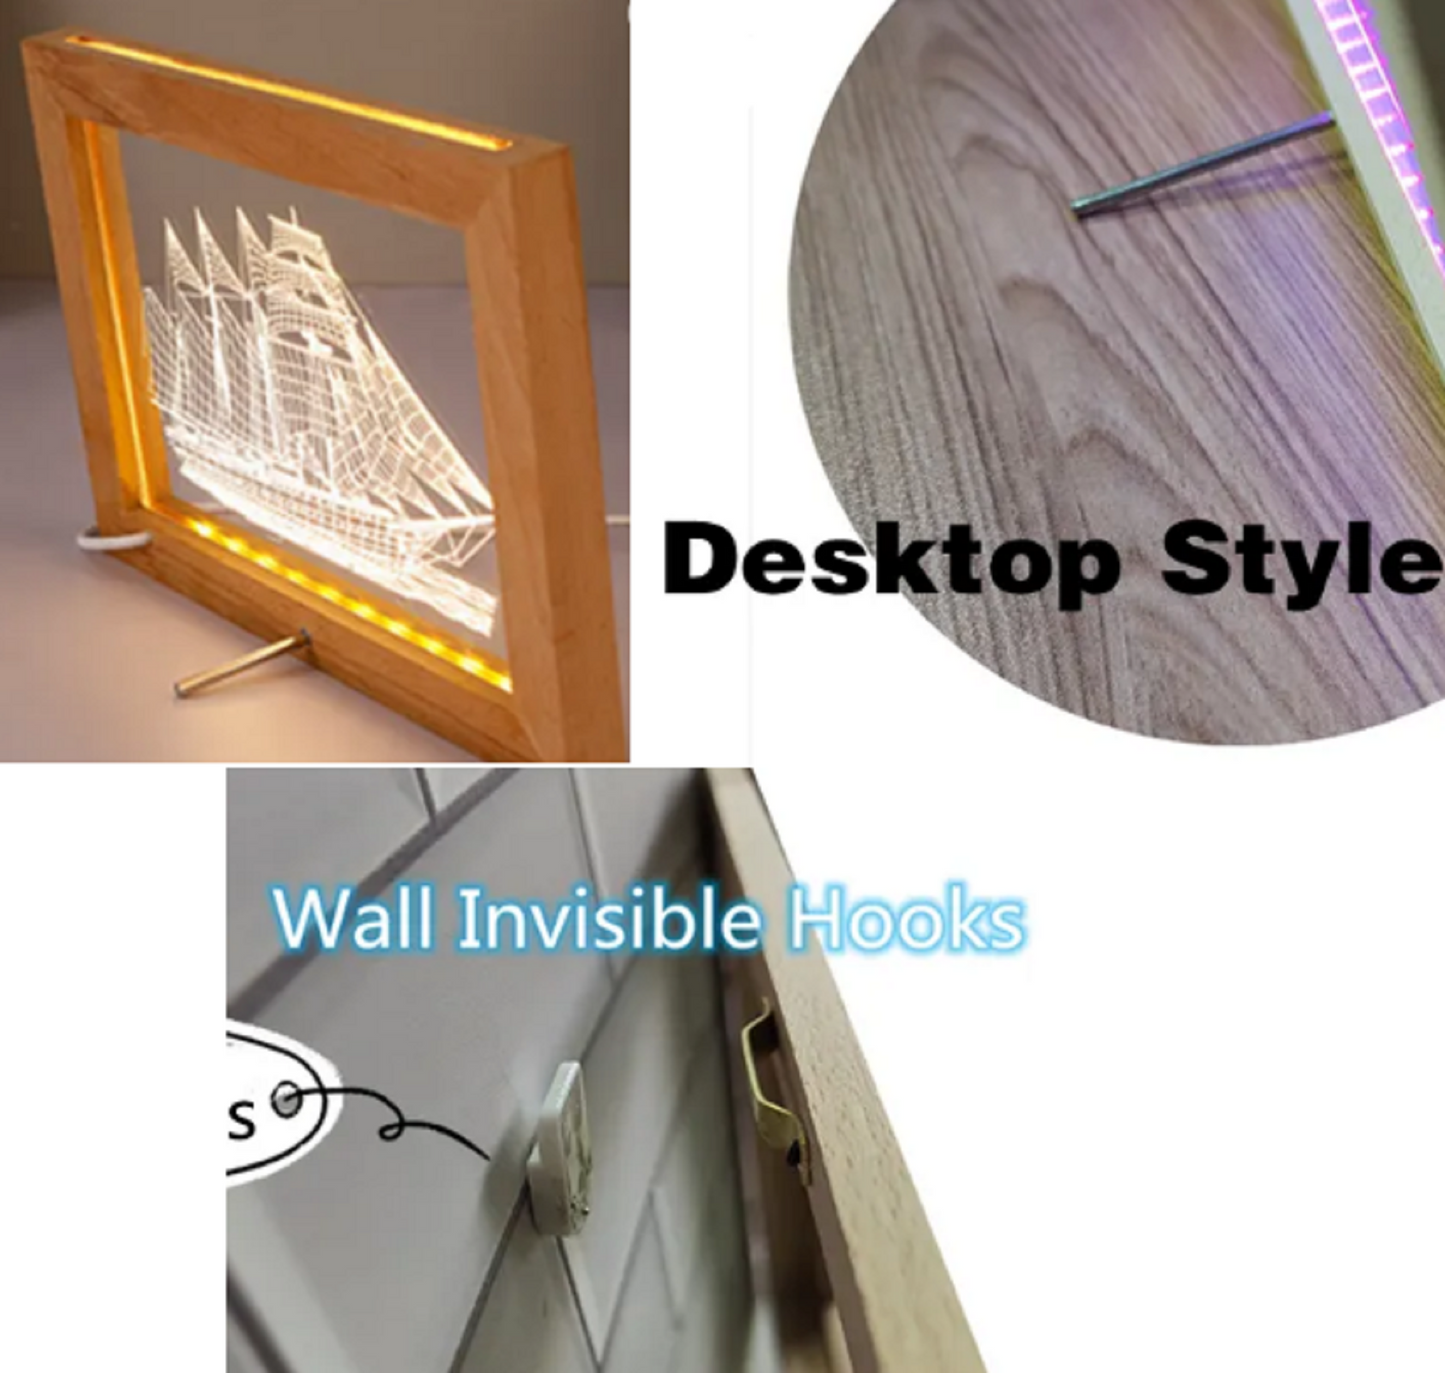 Neon Sign Framed Dual Color Recording Studio Microphone Home Studio Music Wall Desktop Decor